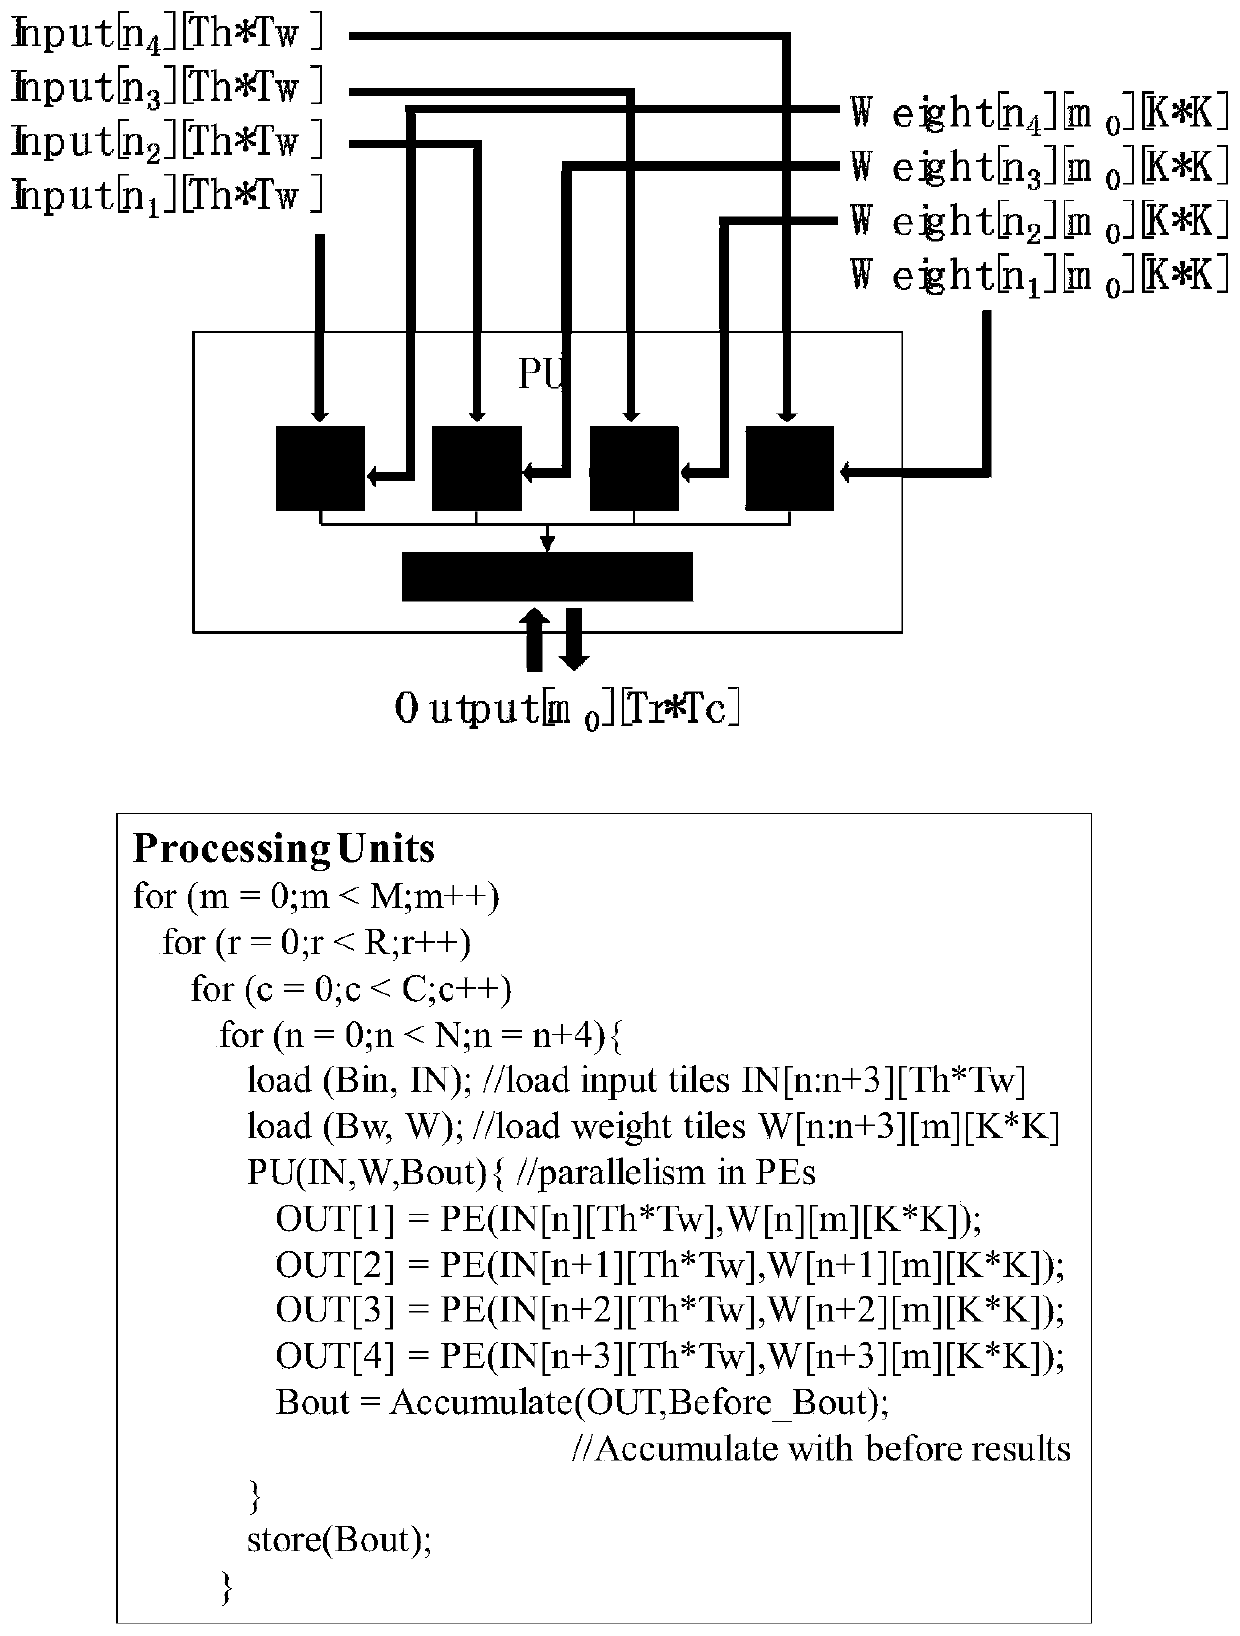 Convolutional neural network accelerator based on Winograd sparse algorithm